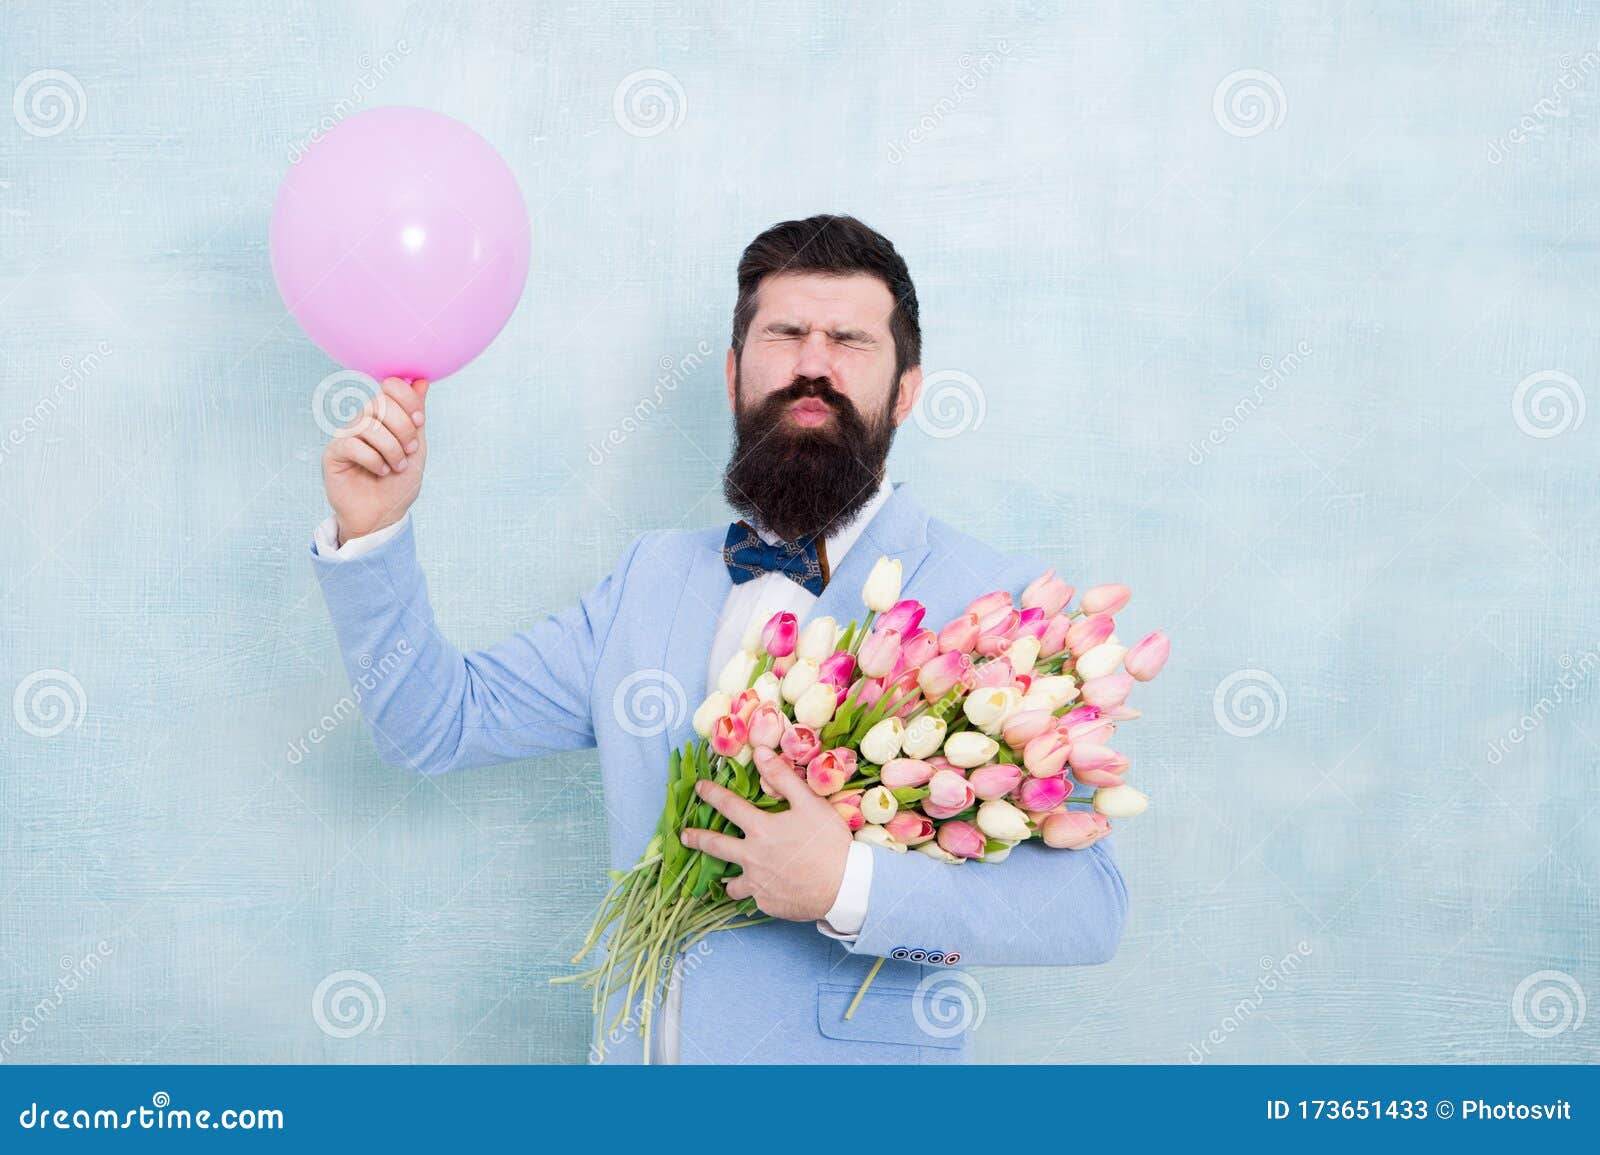 Celebrating Wedding Groom Send Air Kiss With Tulips And Balloon Celebrating Wedding Anniversary Wedding Flowers Stock Image Image Of Love Florist 173651433